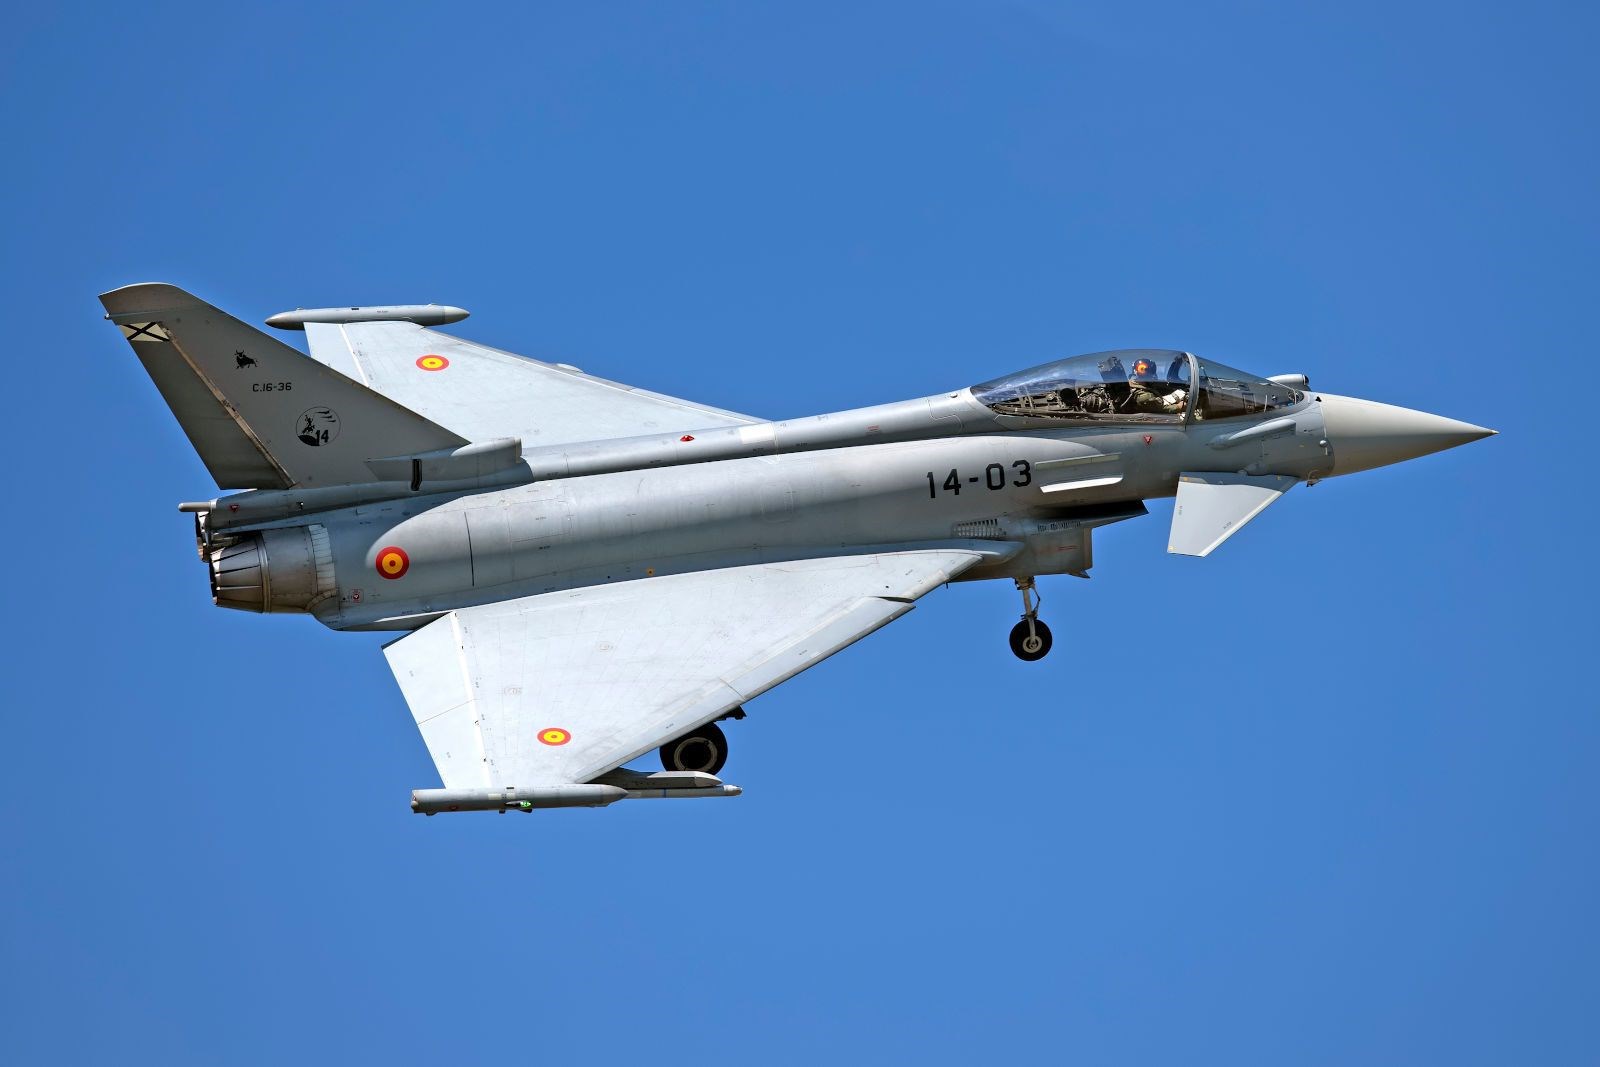 MSB'den F-16, F-35 ve Eurofighter savaş uçağı açıklaması